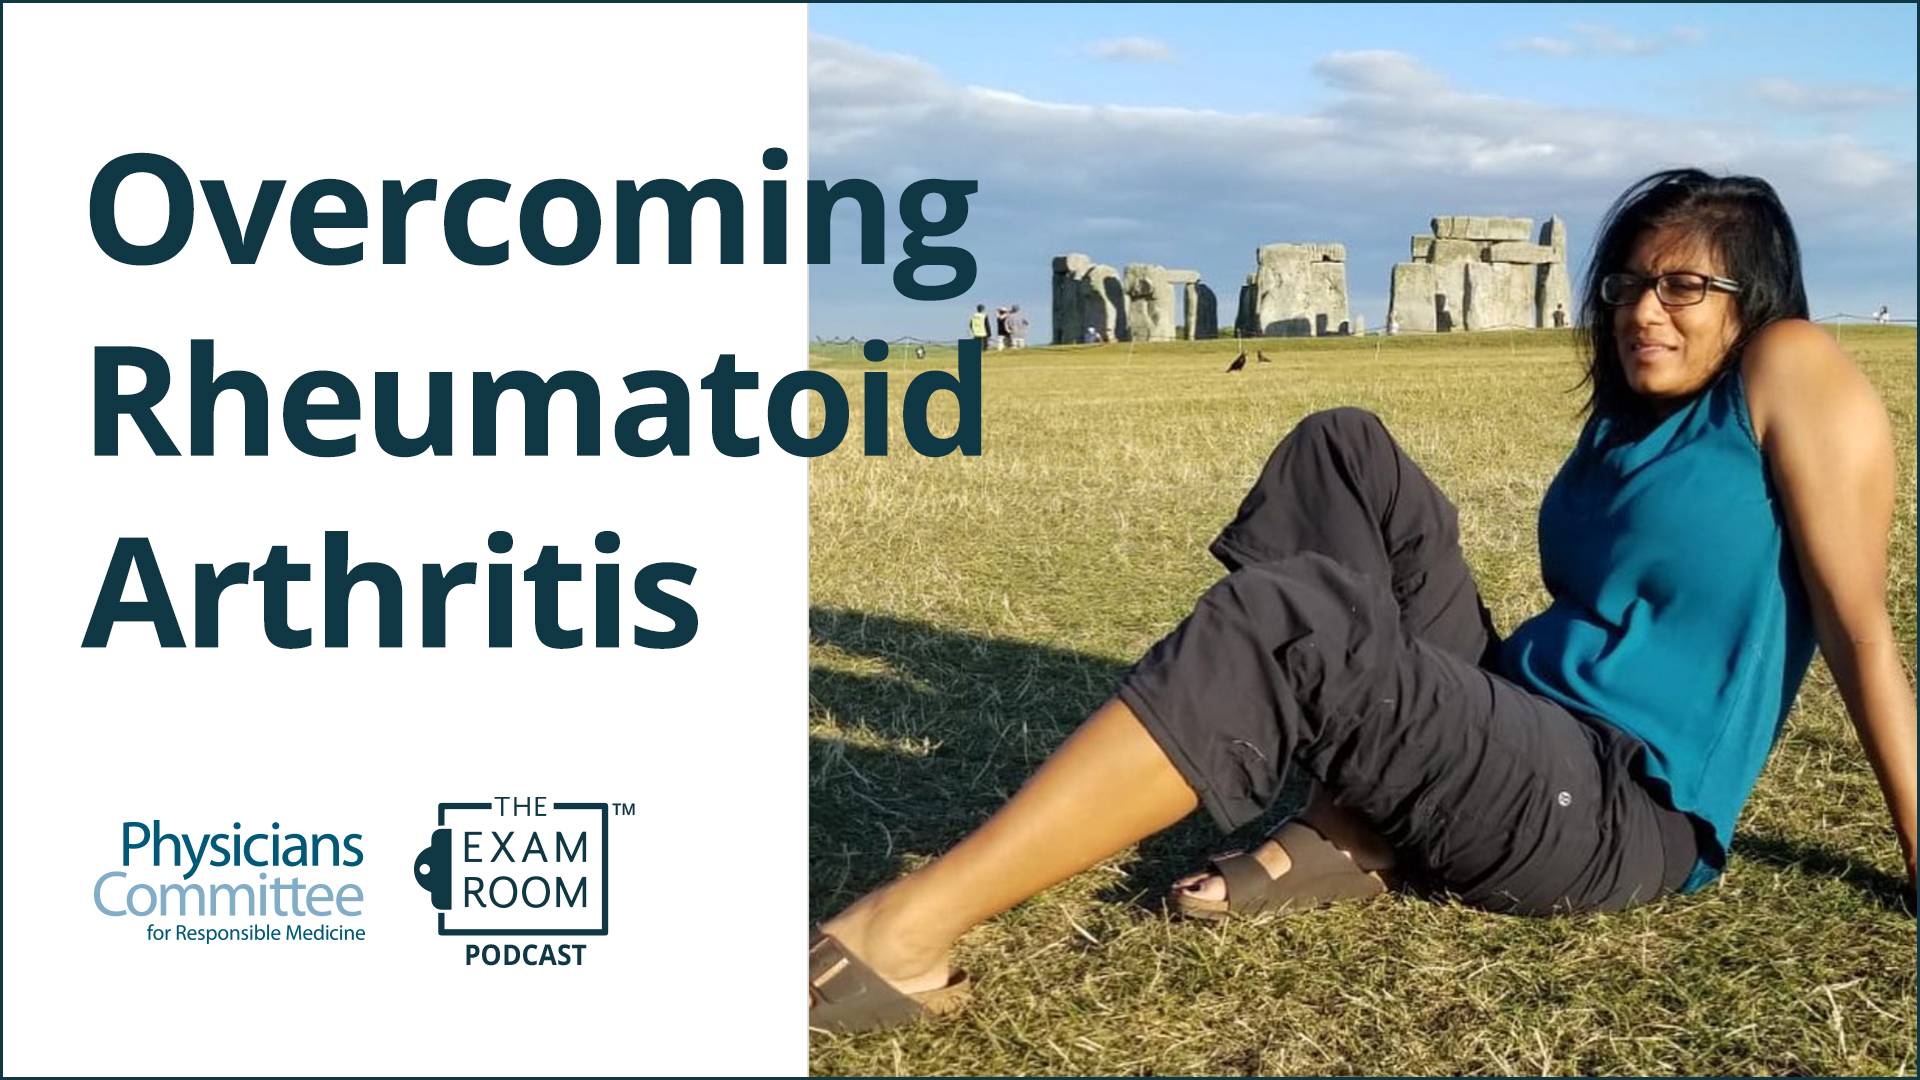 Overcoming Rheumatoid Arthritis with Food